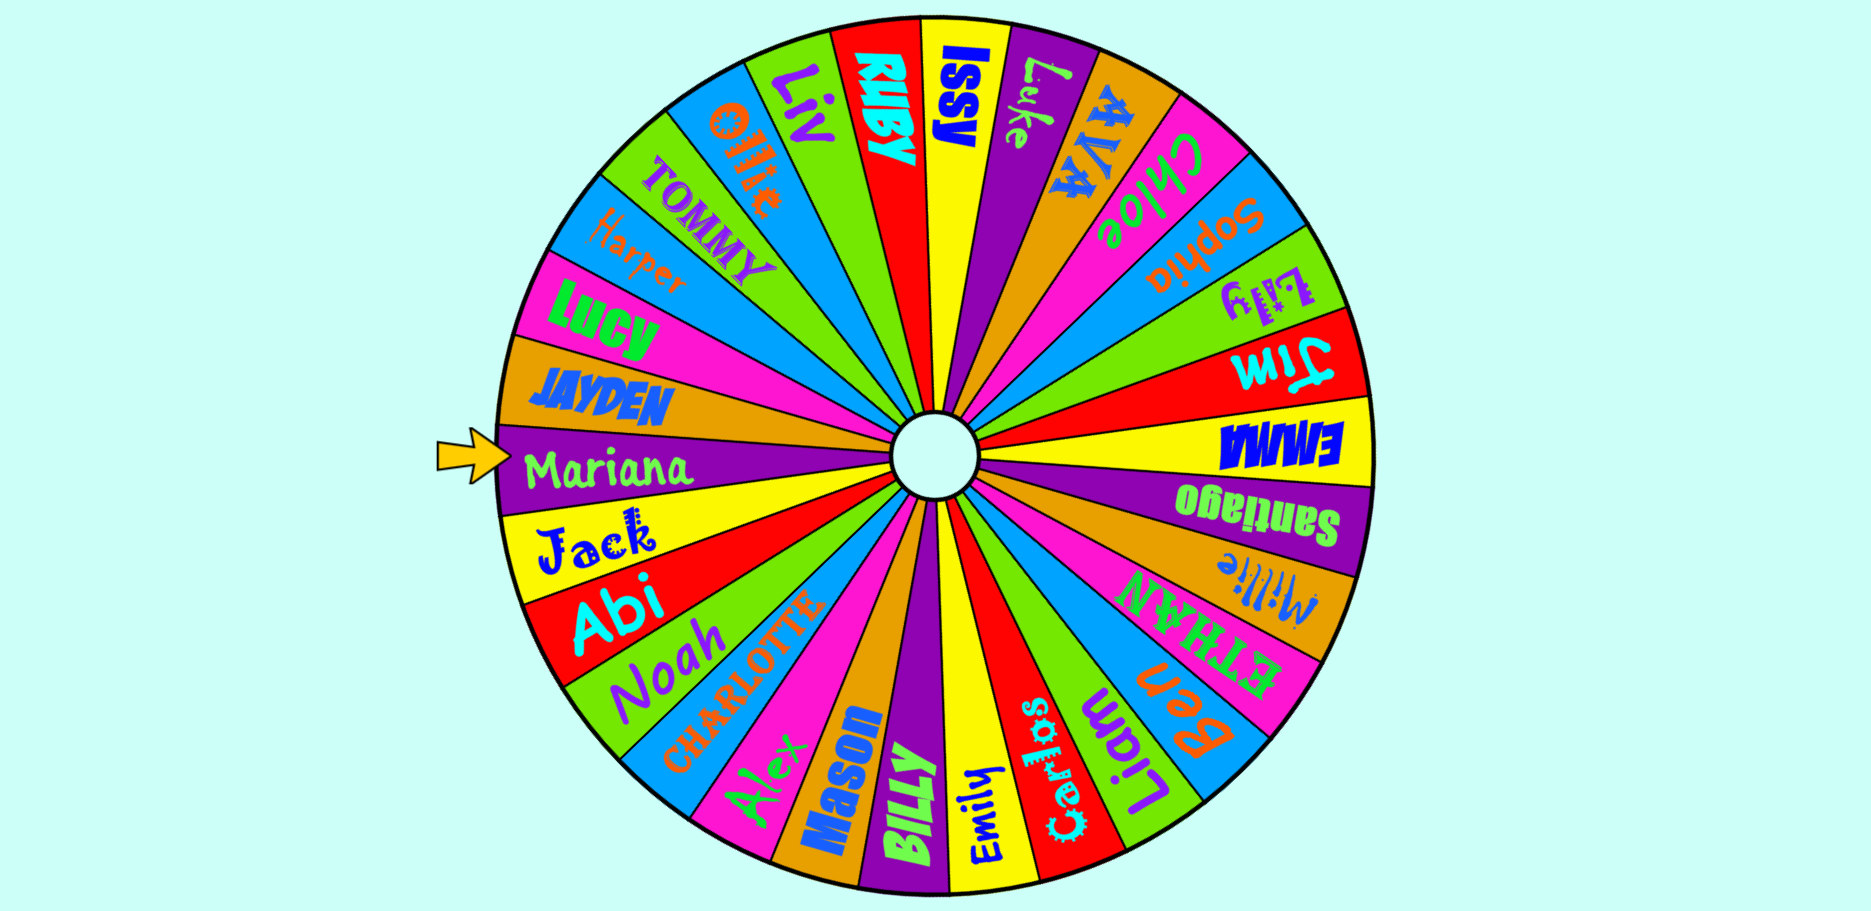 random name spin wheel picker